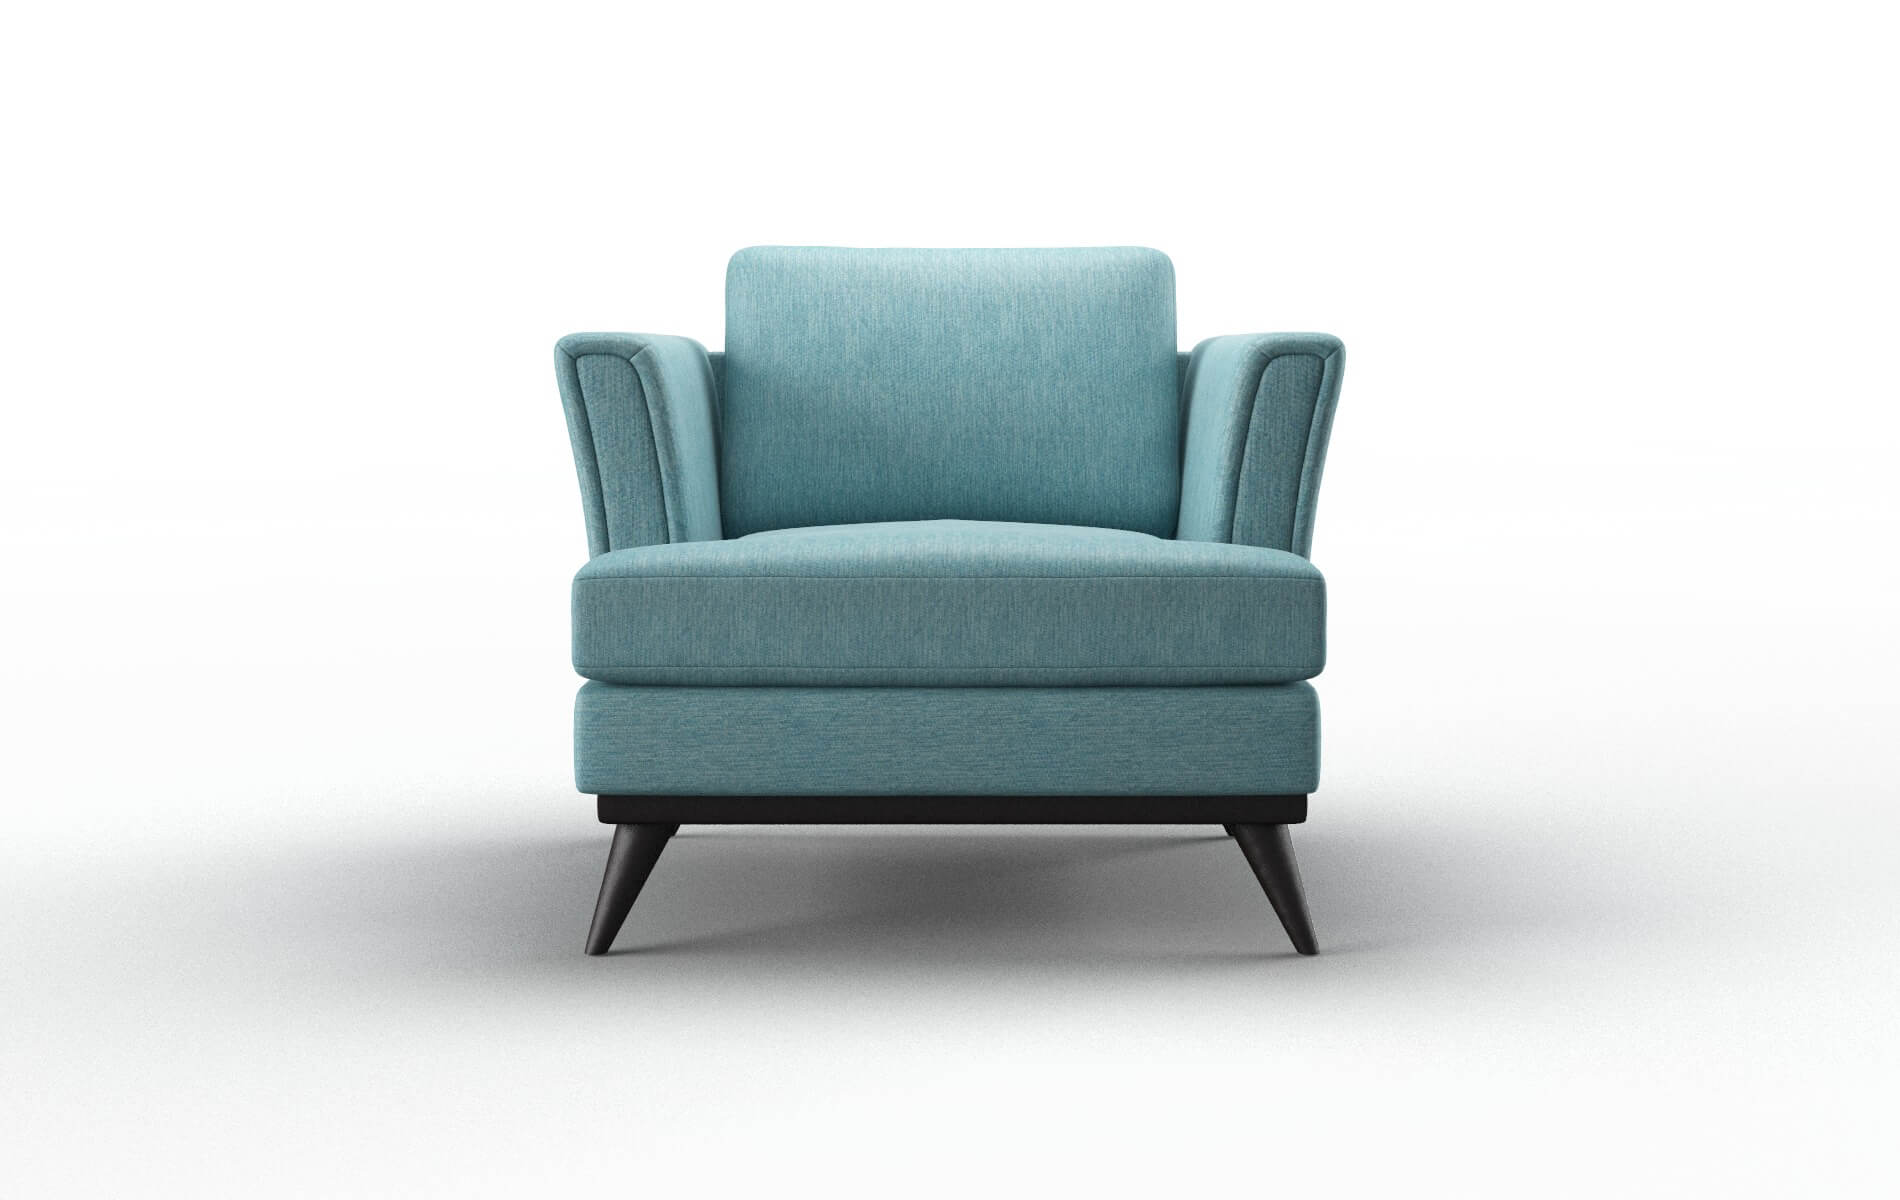 Antalya Cosmo Turquoise Chair espresso legs 1